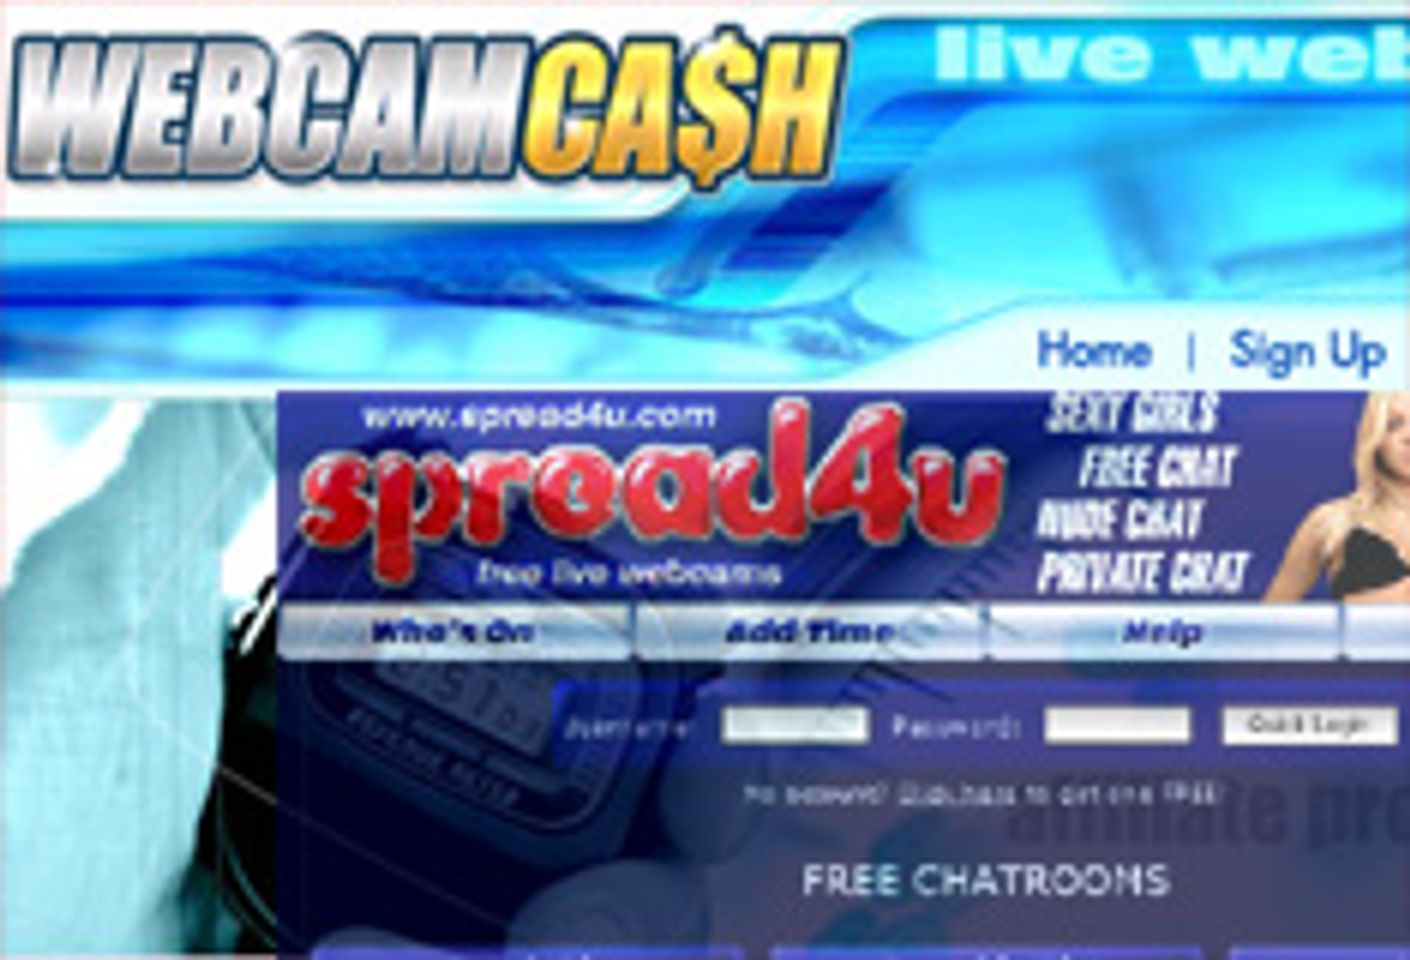 WebcamCash, Spread4U Launch Free Hosted Webcam Galleries